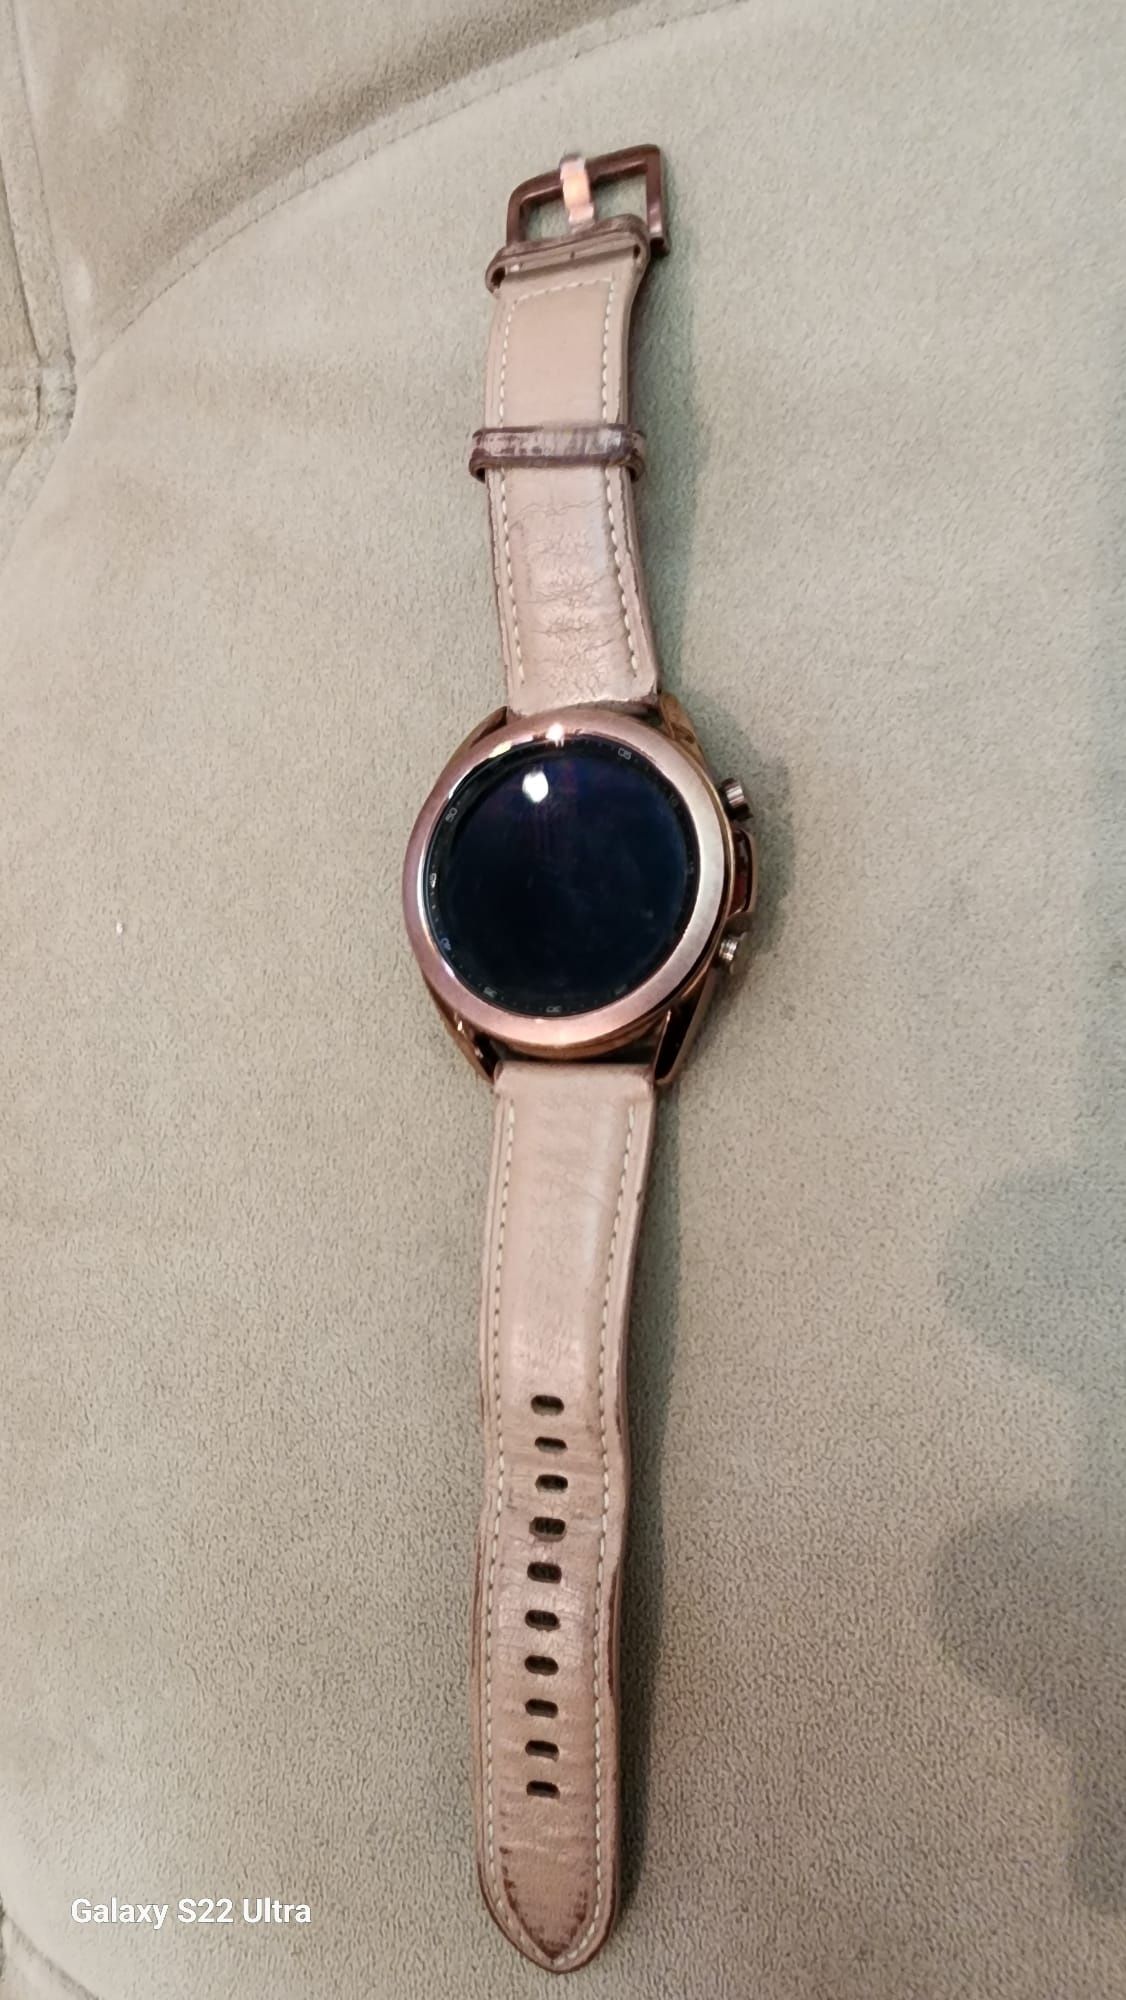 Smartwatch Samsung galaxy watch 3